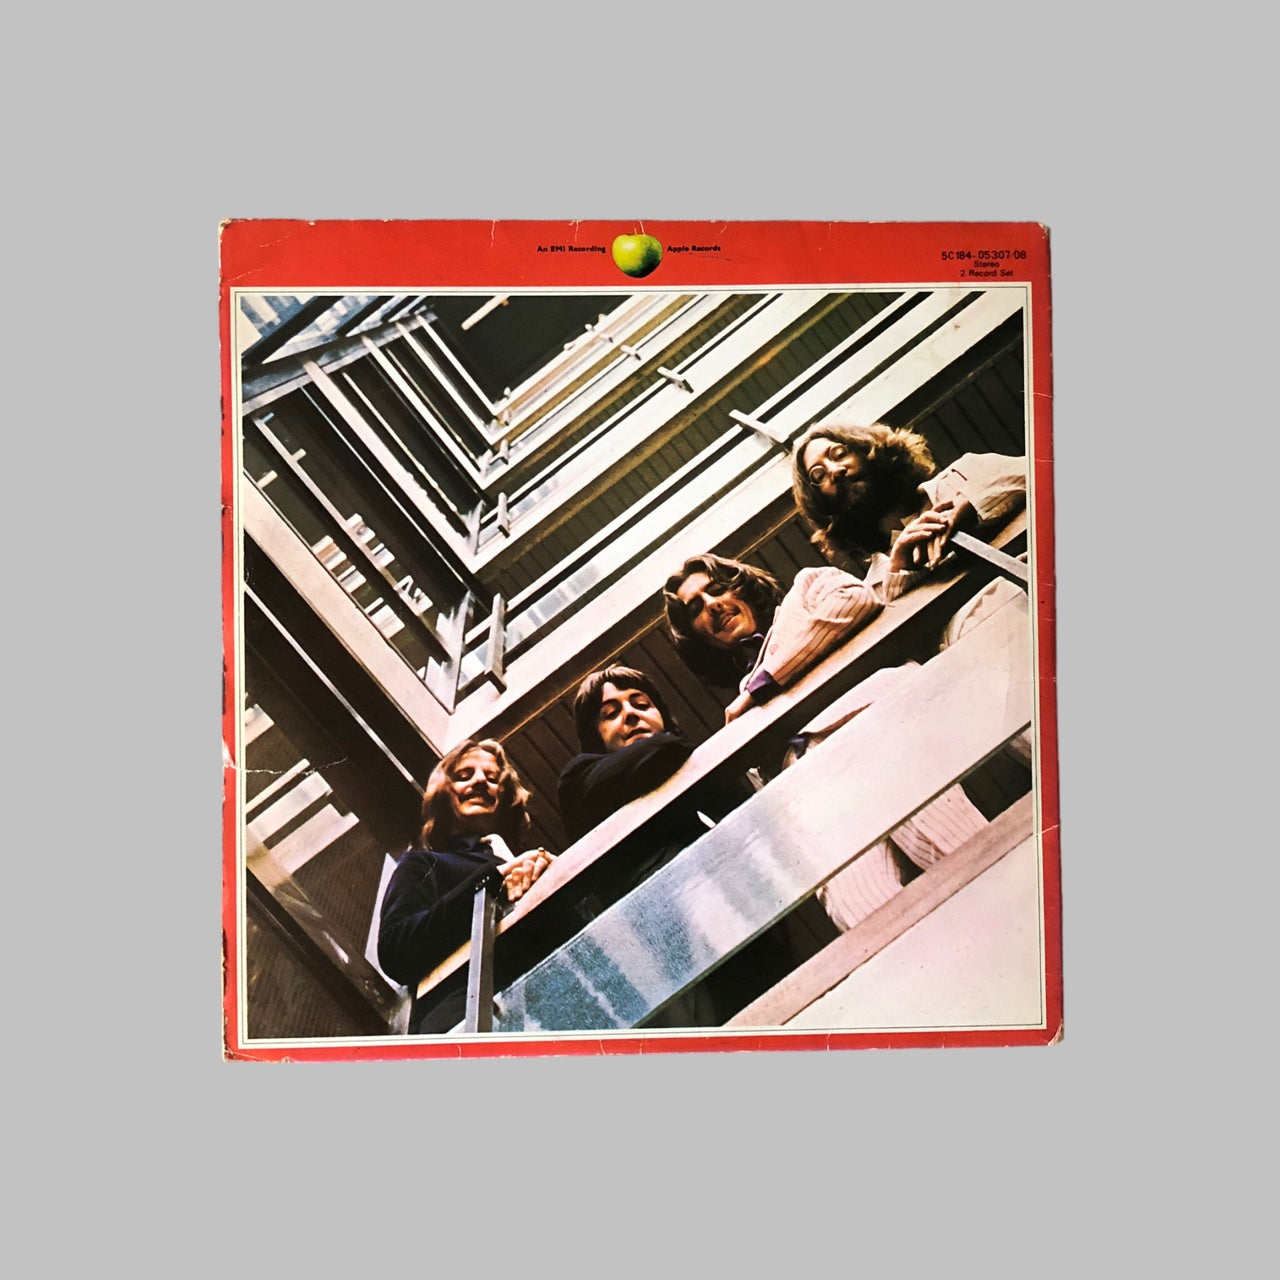 LP Vinyl - The Beatles  - 1962 - 1966